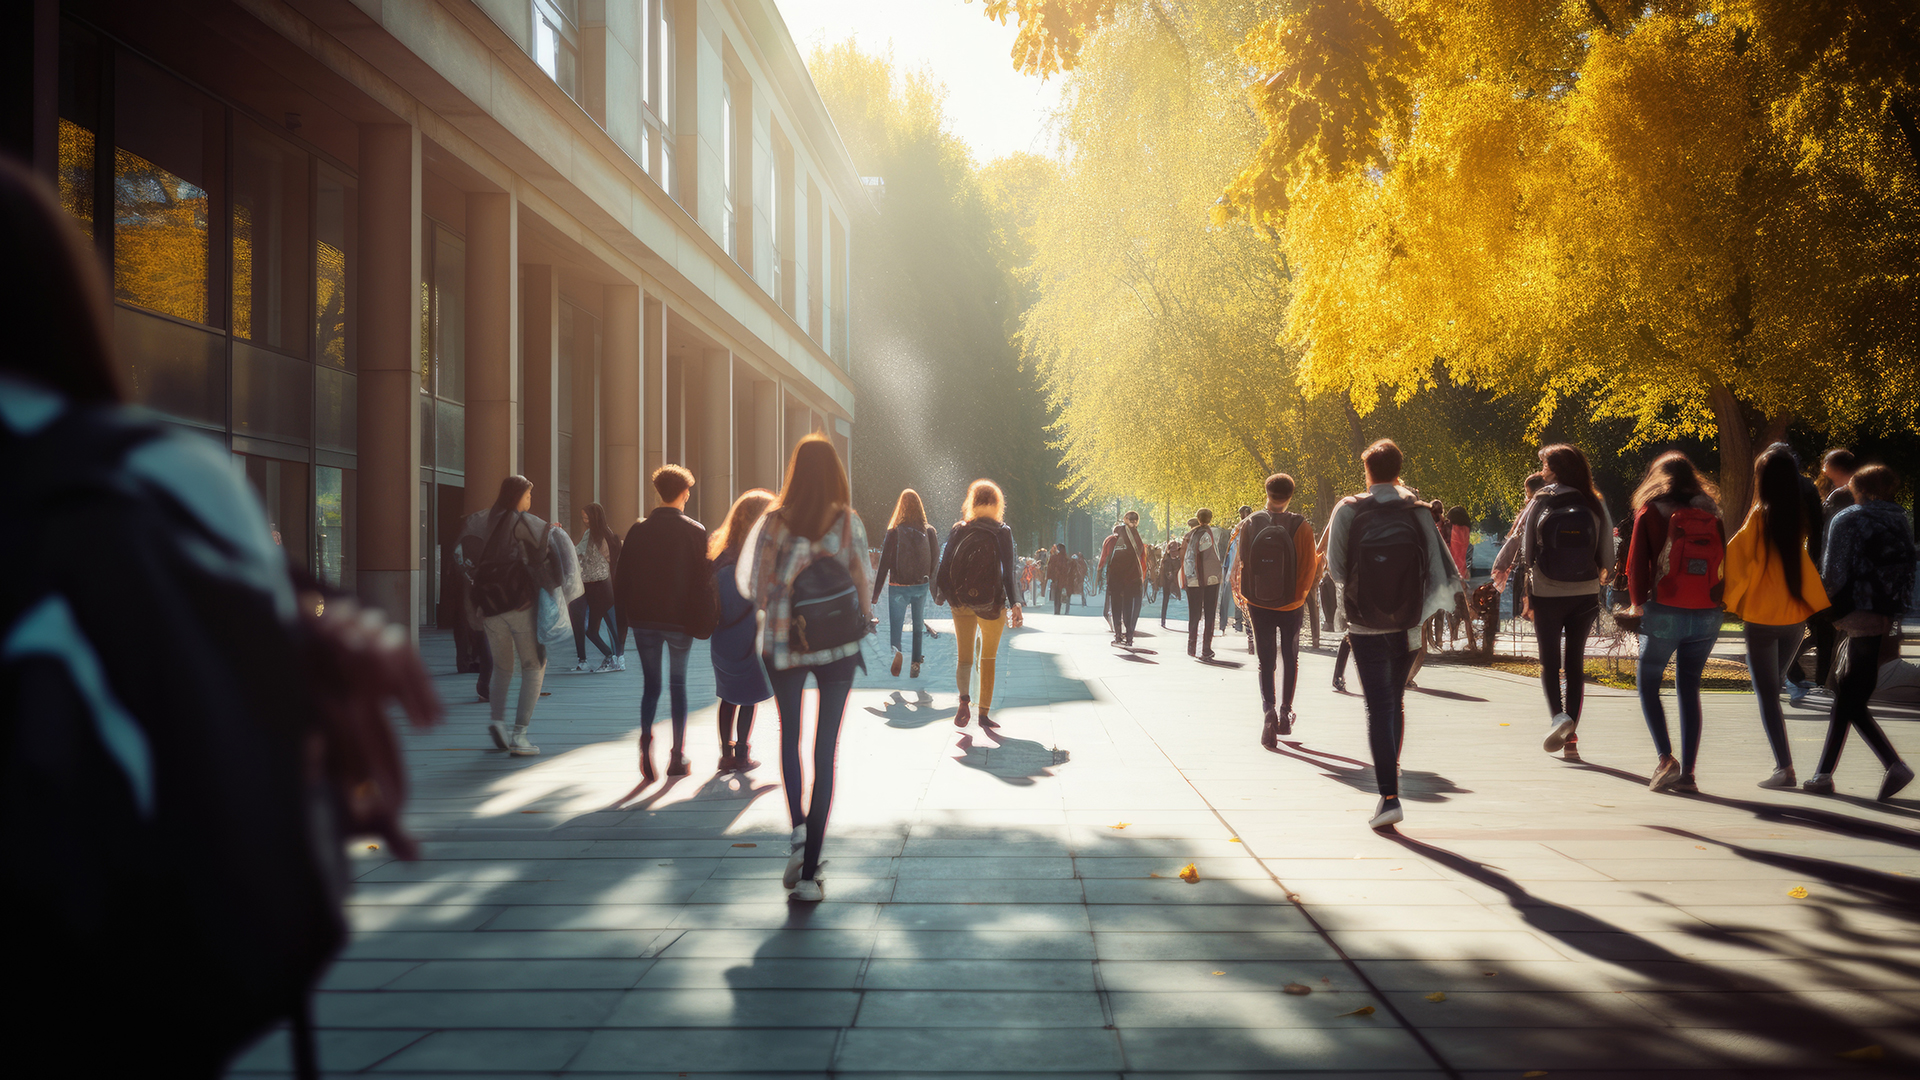 People walking across a University campus.